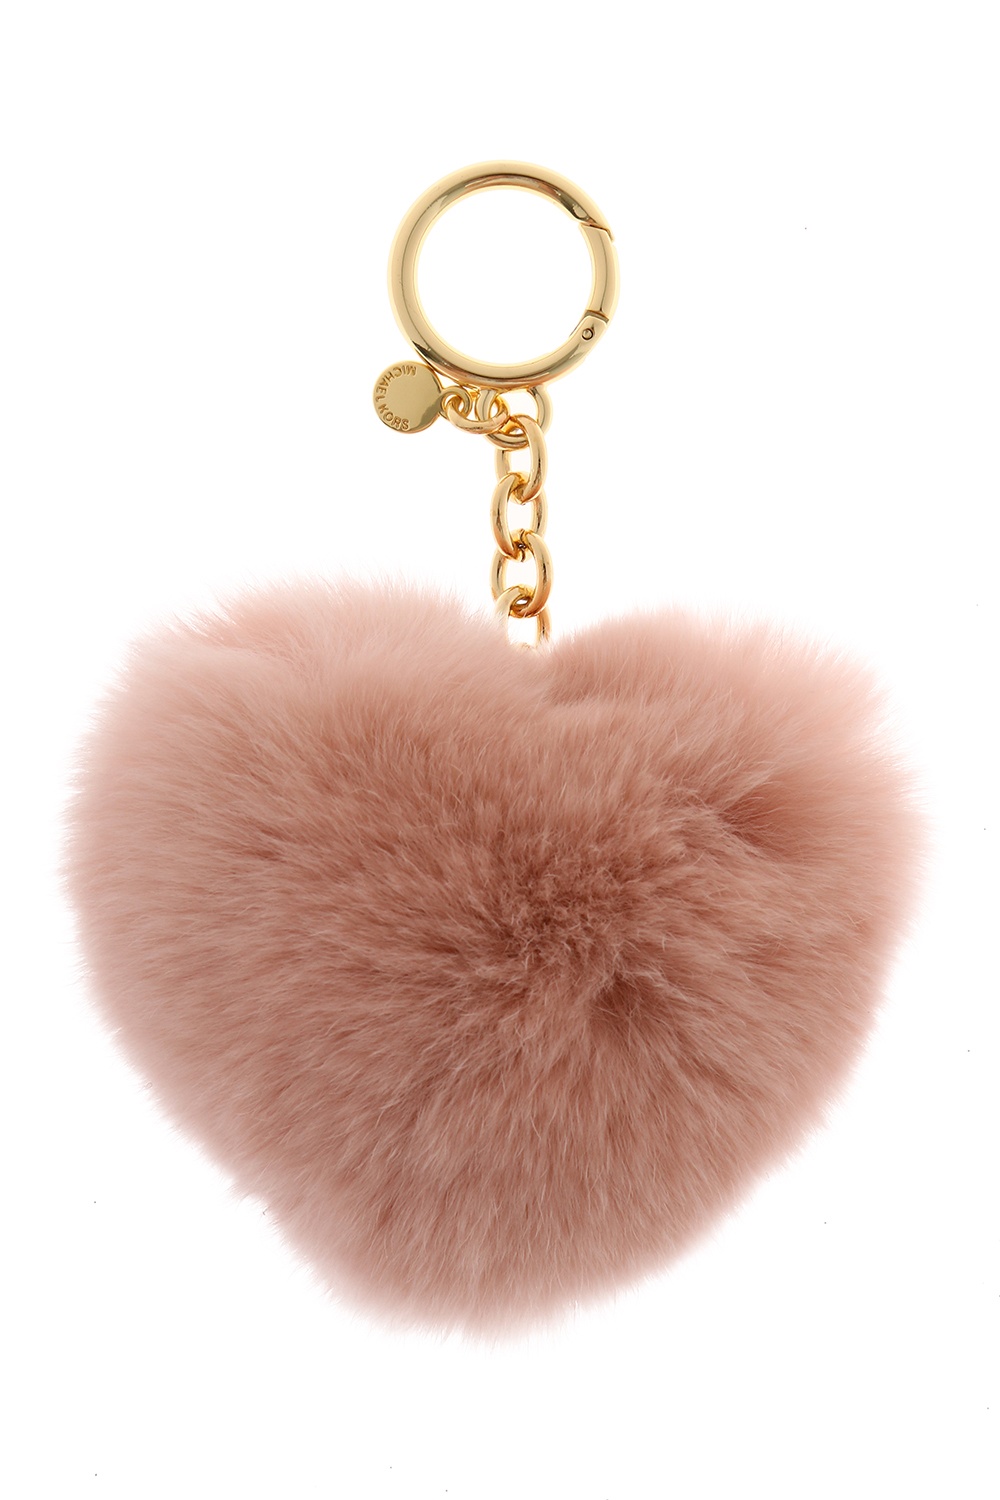 Heart-shaped fur key ring Michael 